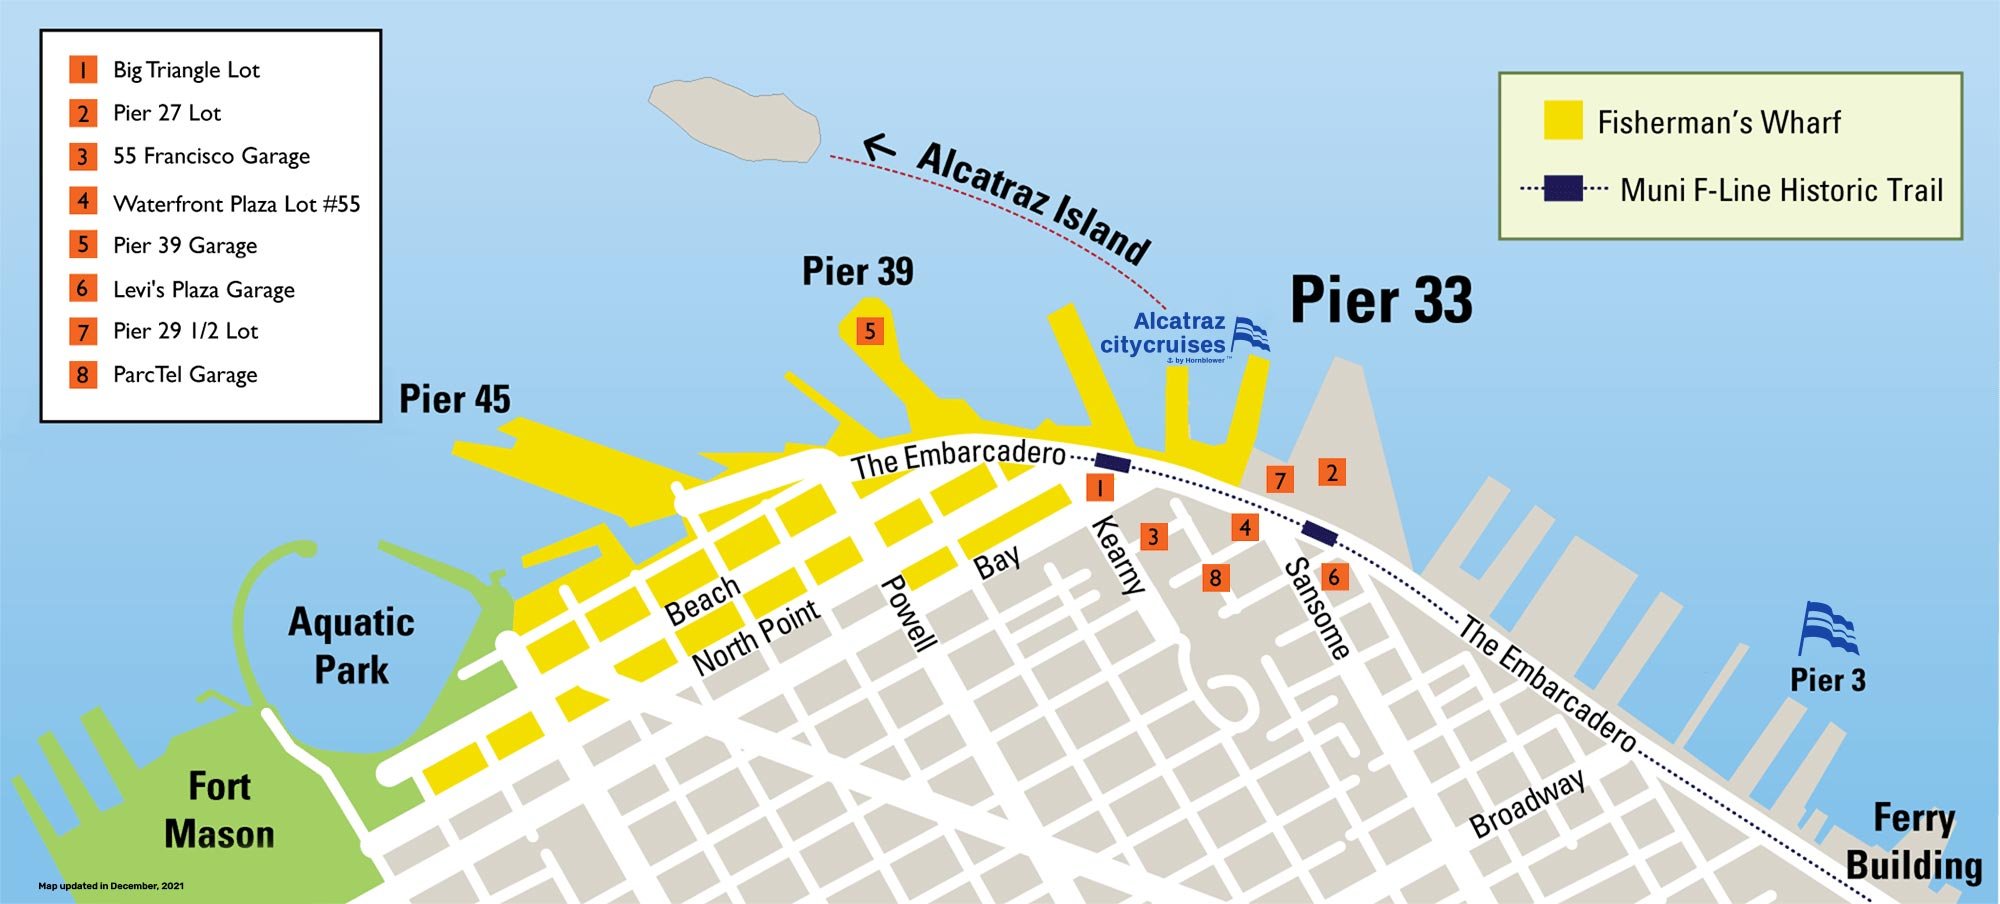 Mapa do local de estacionamento dos cruzeiros da cidade de Alcatraz.